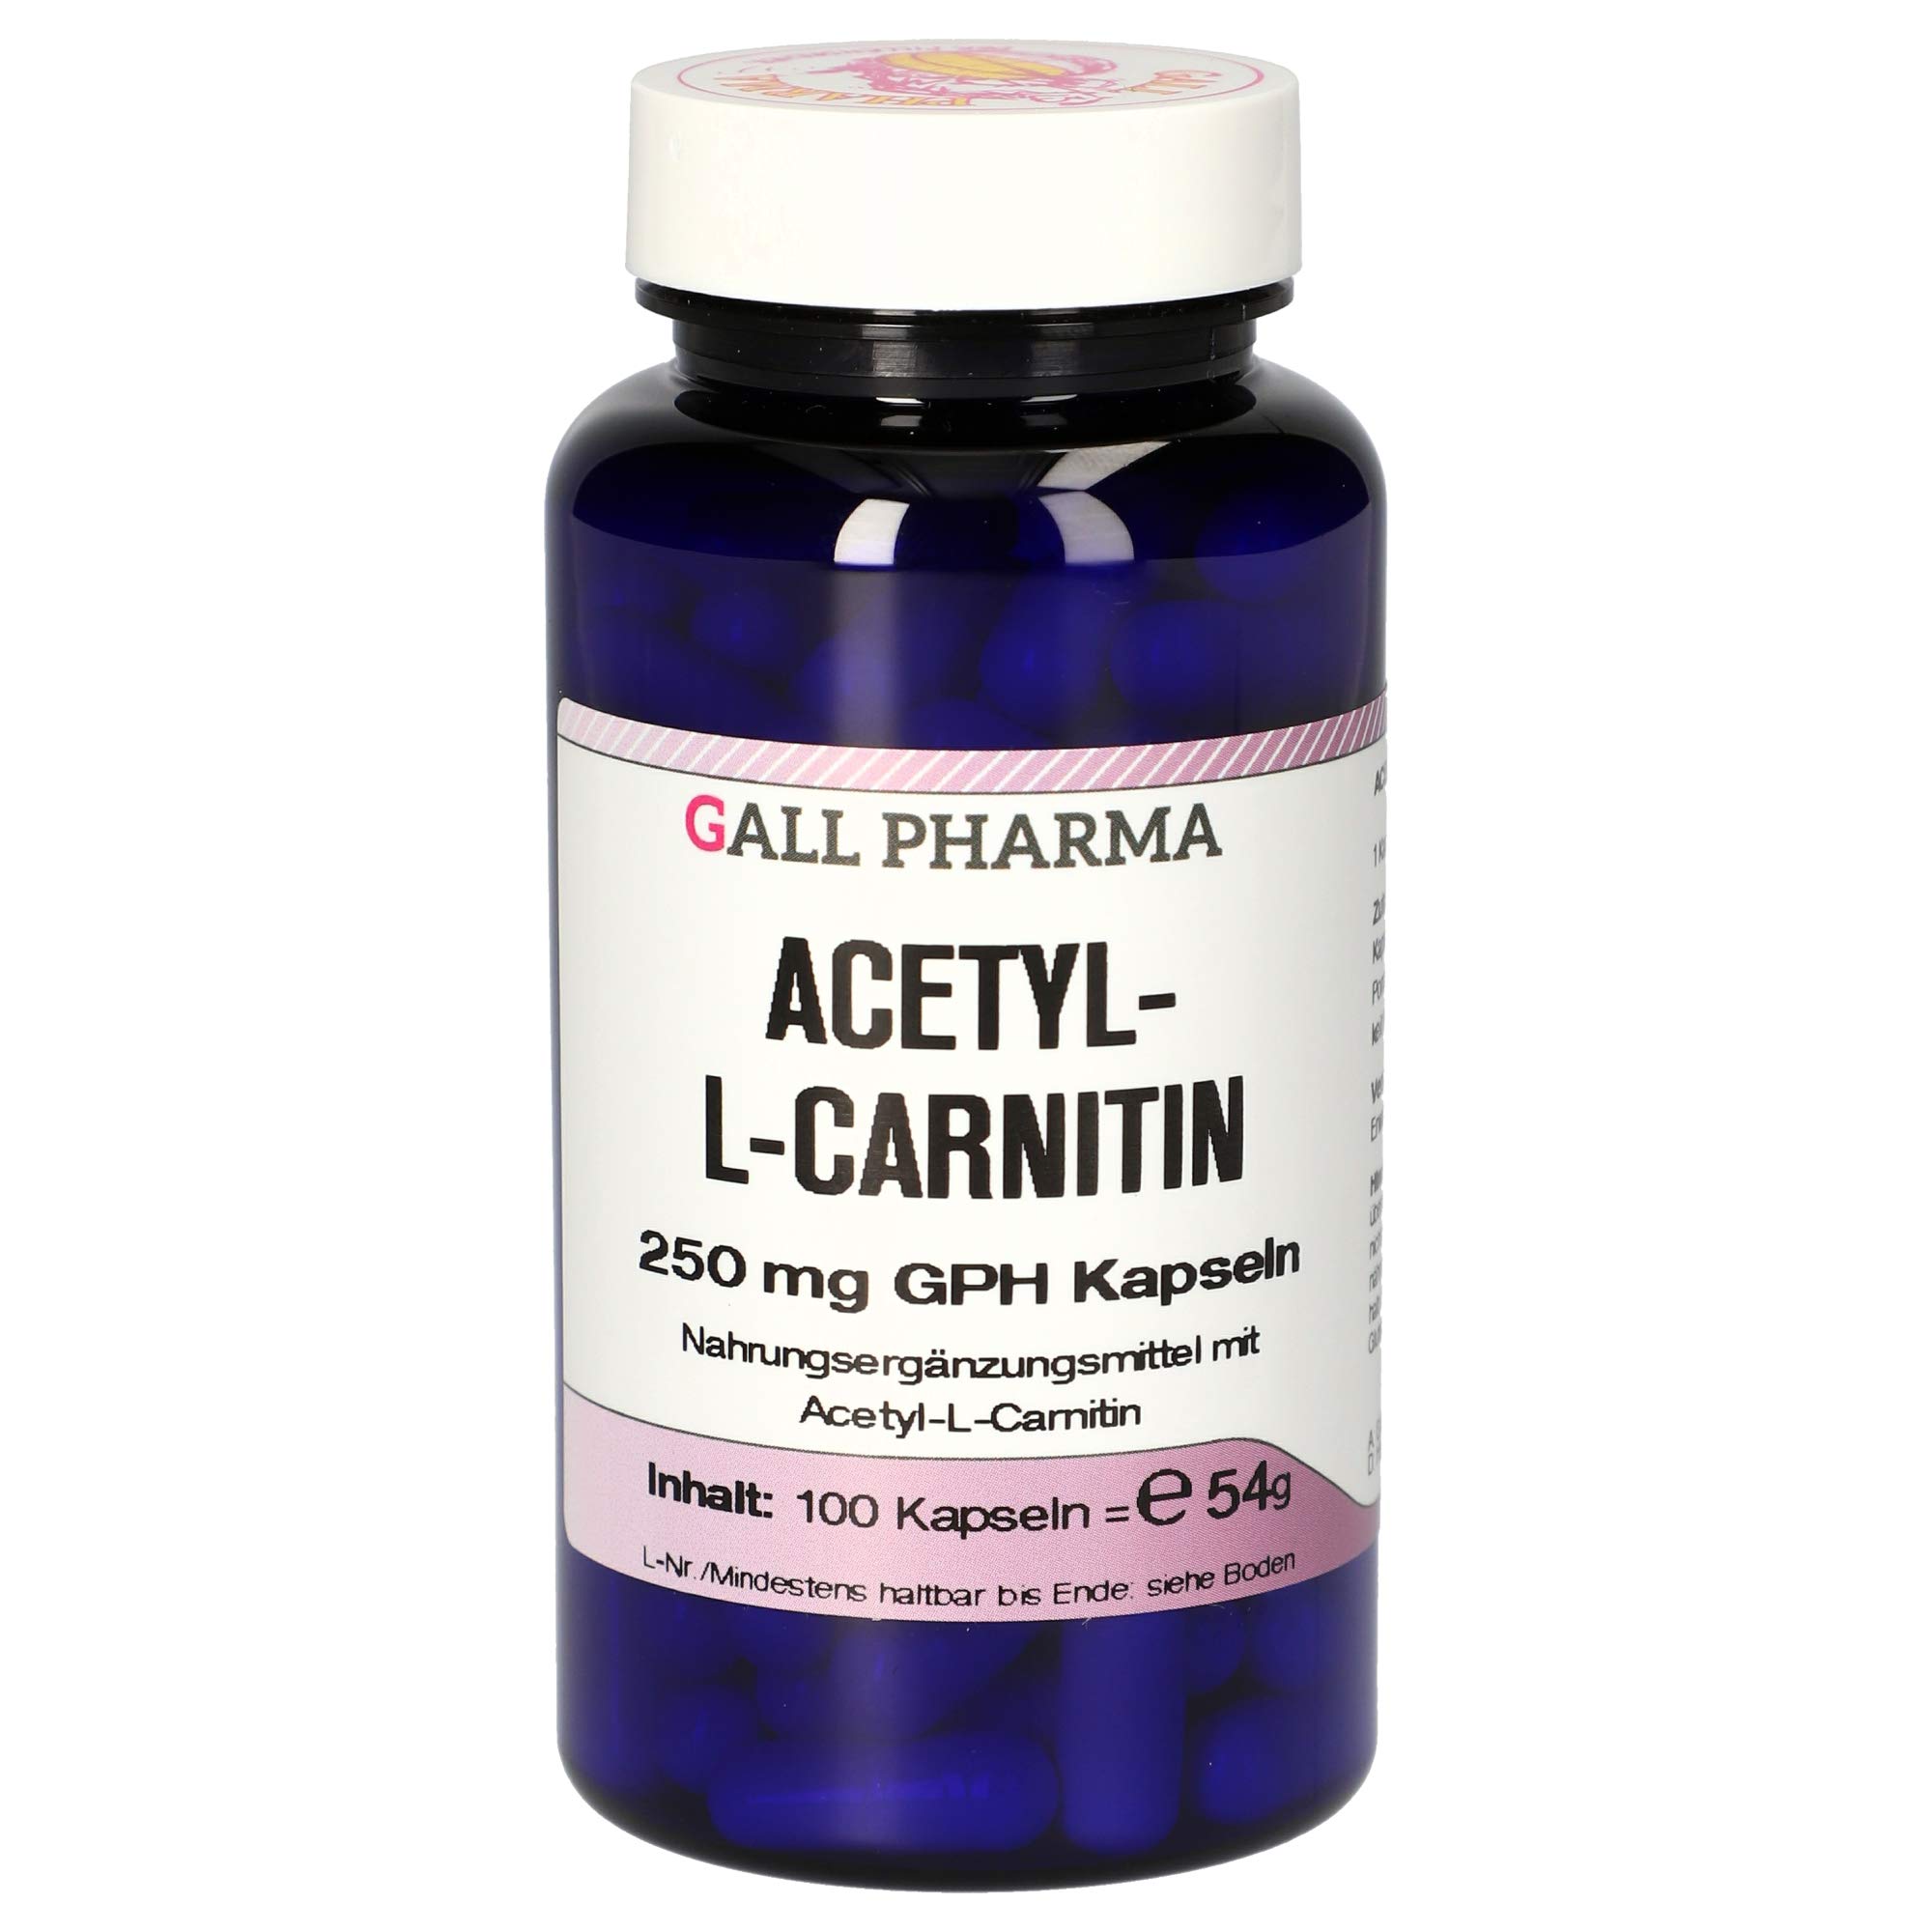 Gall Pharma Acetyl-L-Carnitin 250 mg GPH Kapseln 100 Stück